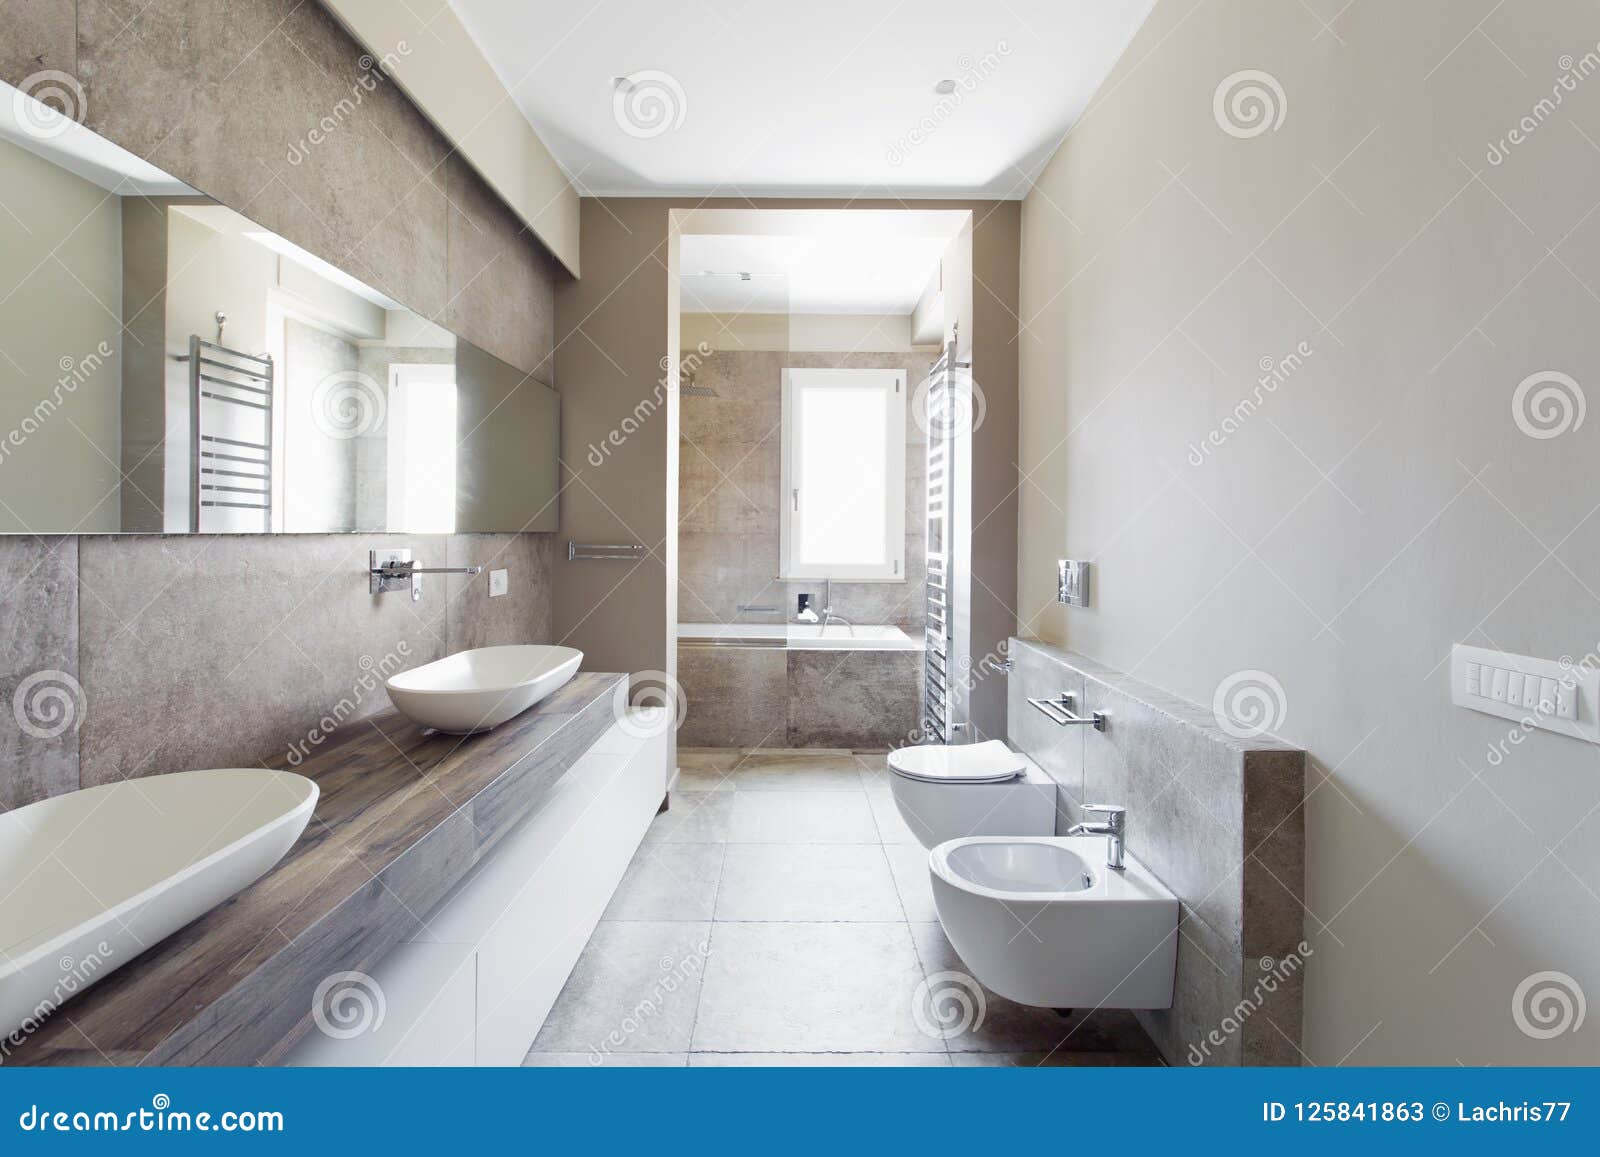 Modern Bathroom With Double Sink Stock Image Image Of Corian